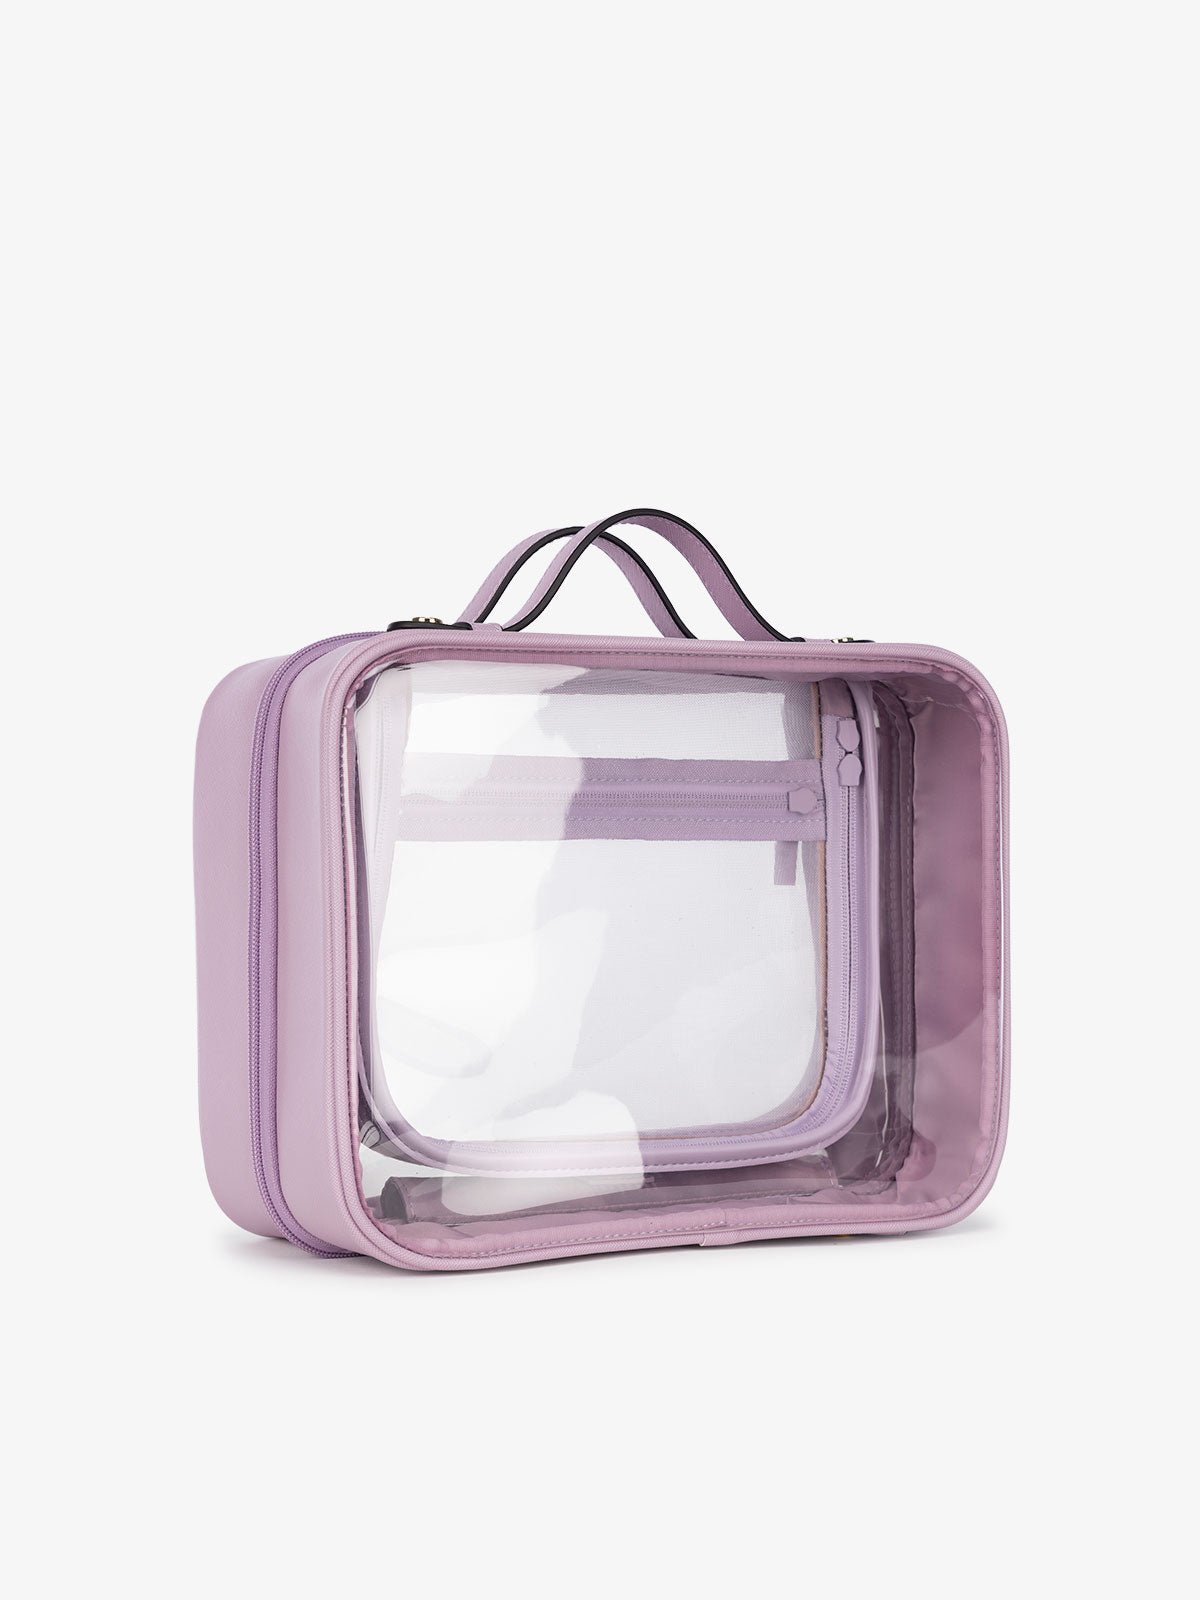 transparent cosmetic travel bag